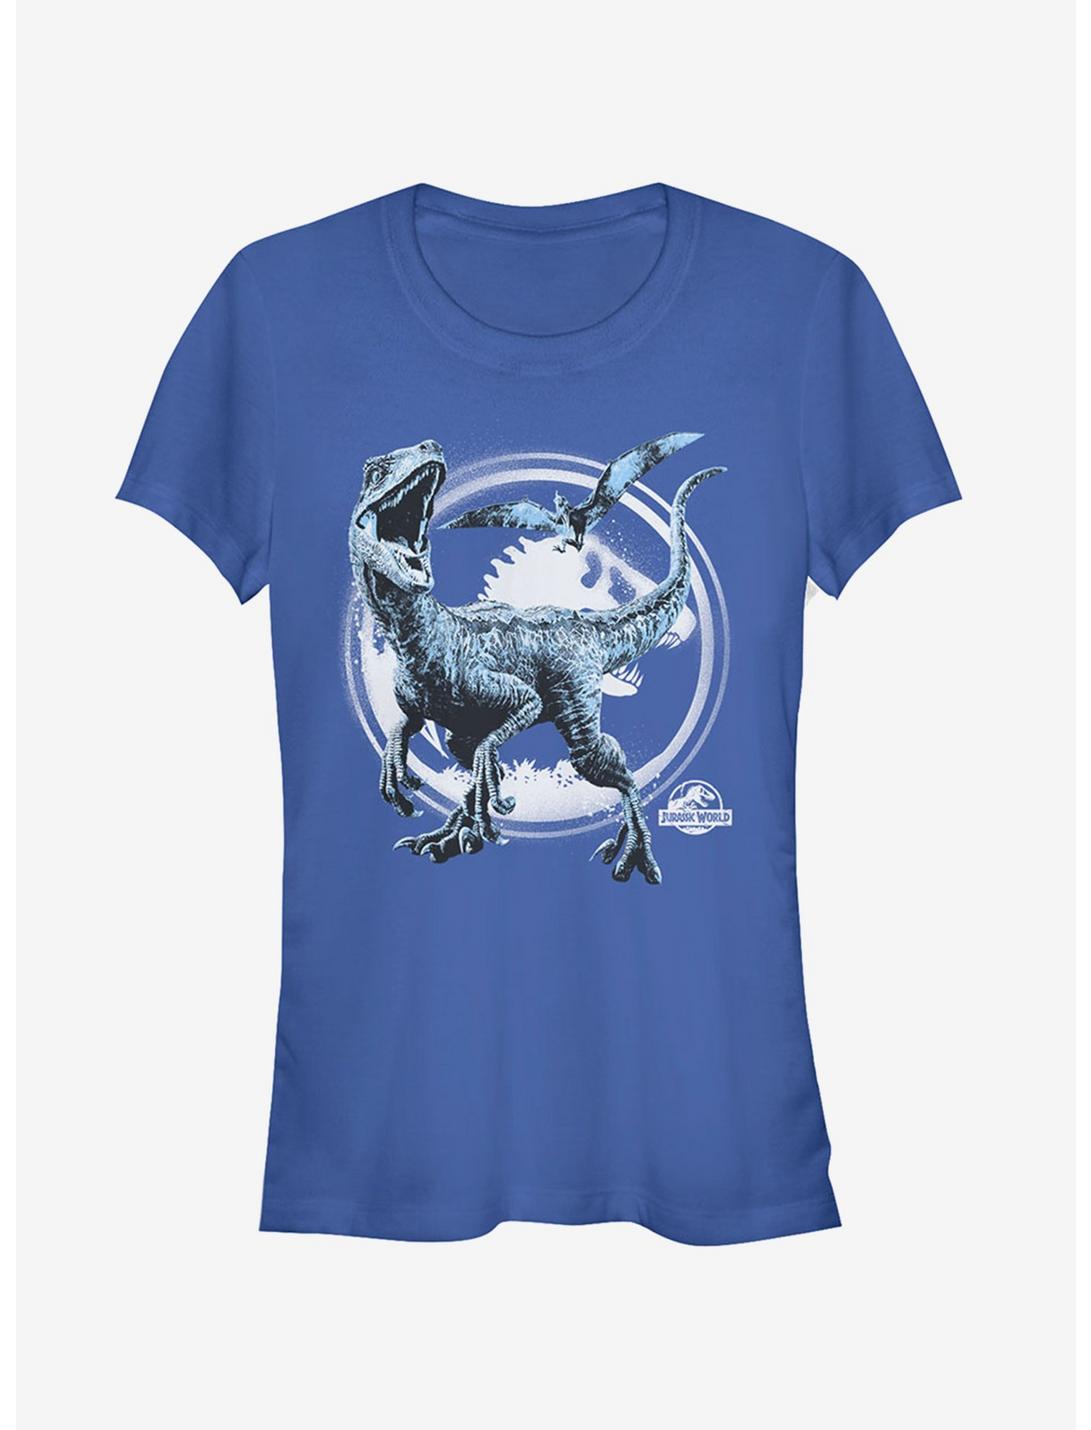 Jurassic World Fallen Kingdom Dinosaur Battle Girls T-Shirt, ROYAL, hi-res